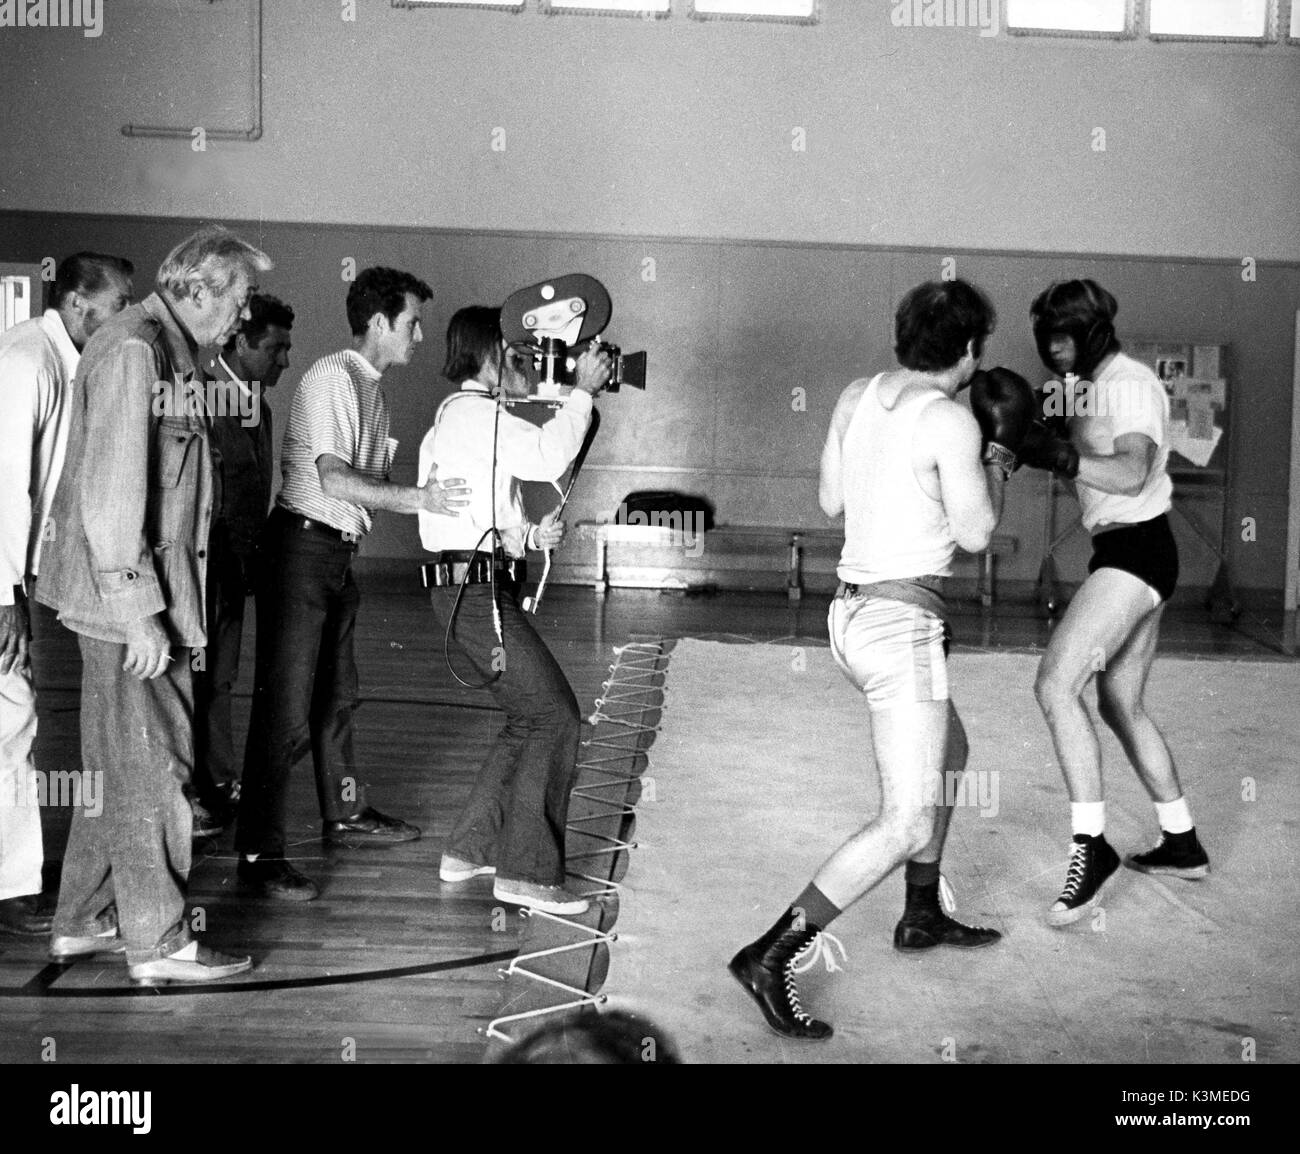 FAT CITY [USA 1972] Regisseur John Huston [2 Links], Kameramann CONRAD HALL mit Handkamera, STACY KEACH [Weiße Shorts] Datum: 1972 Stockfoto